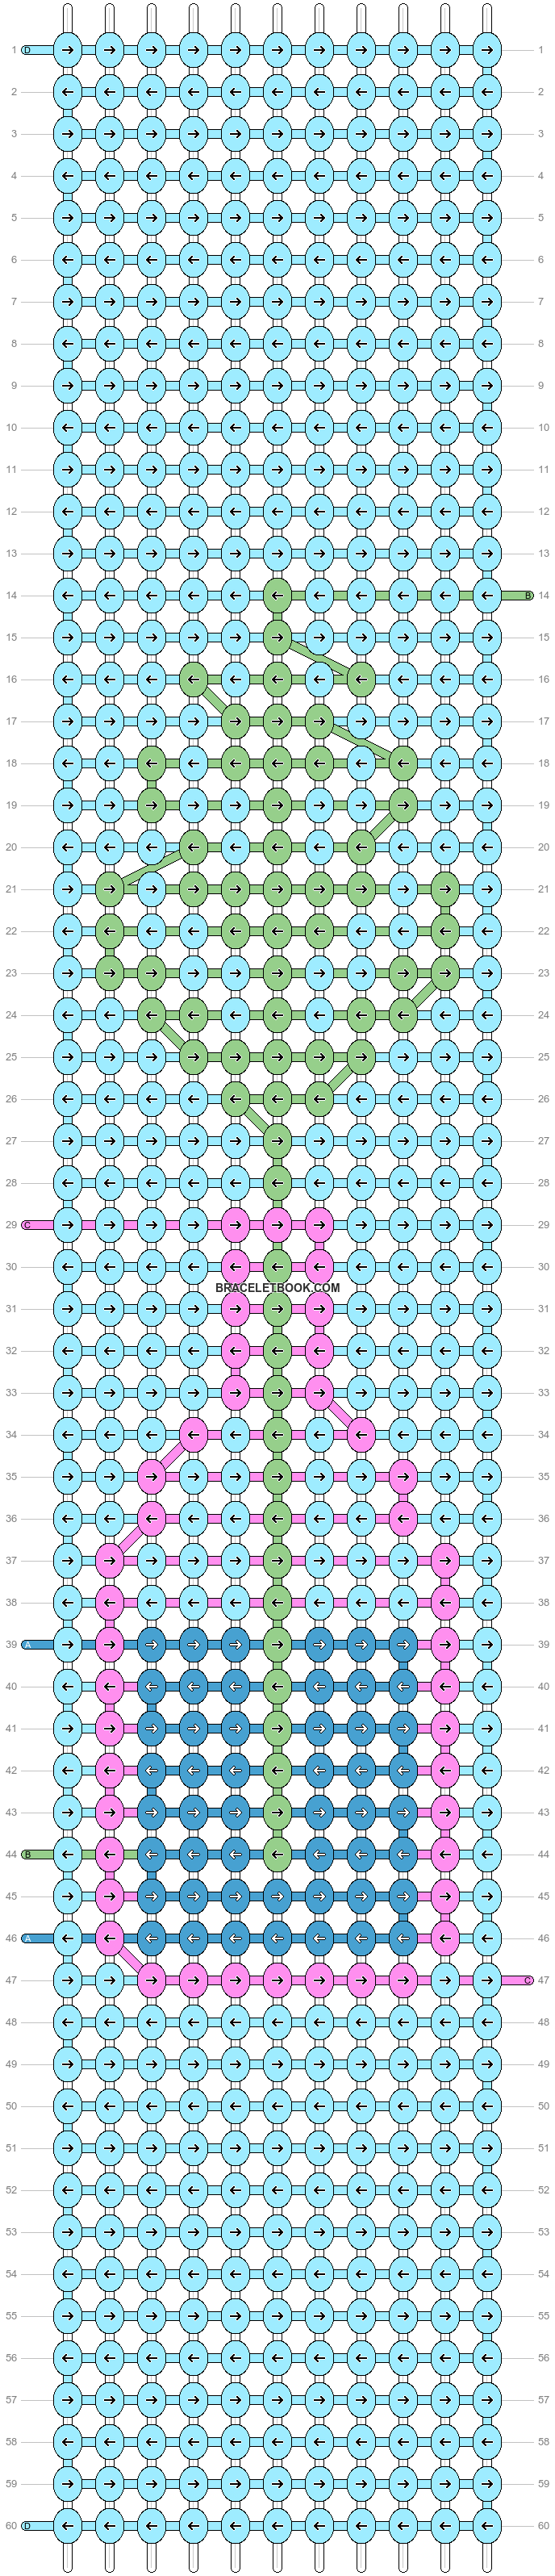 Alpha pattern #38260 variation #42957 pattern